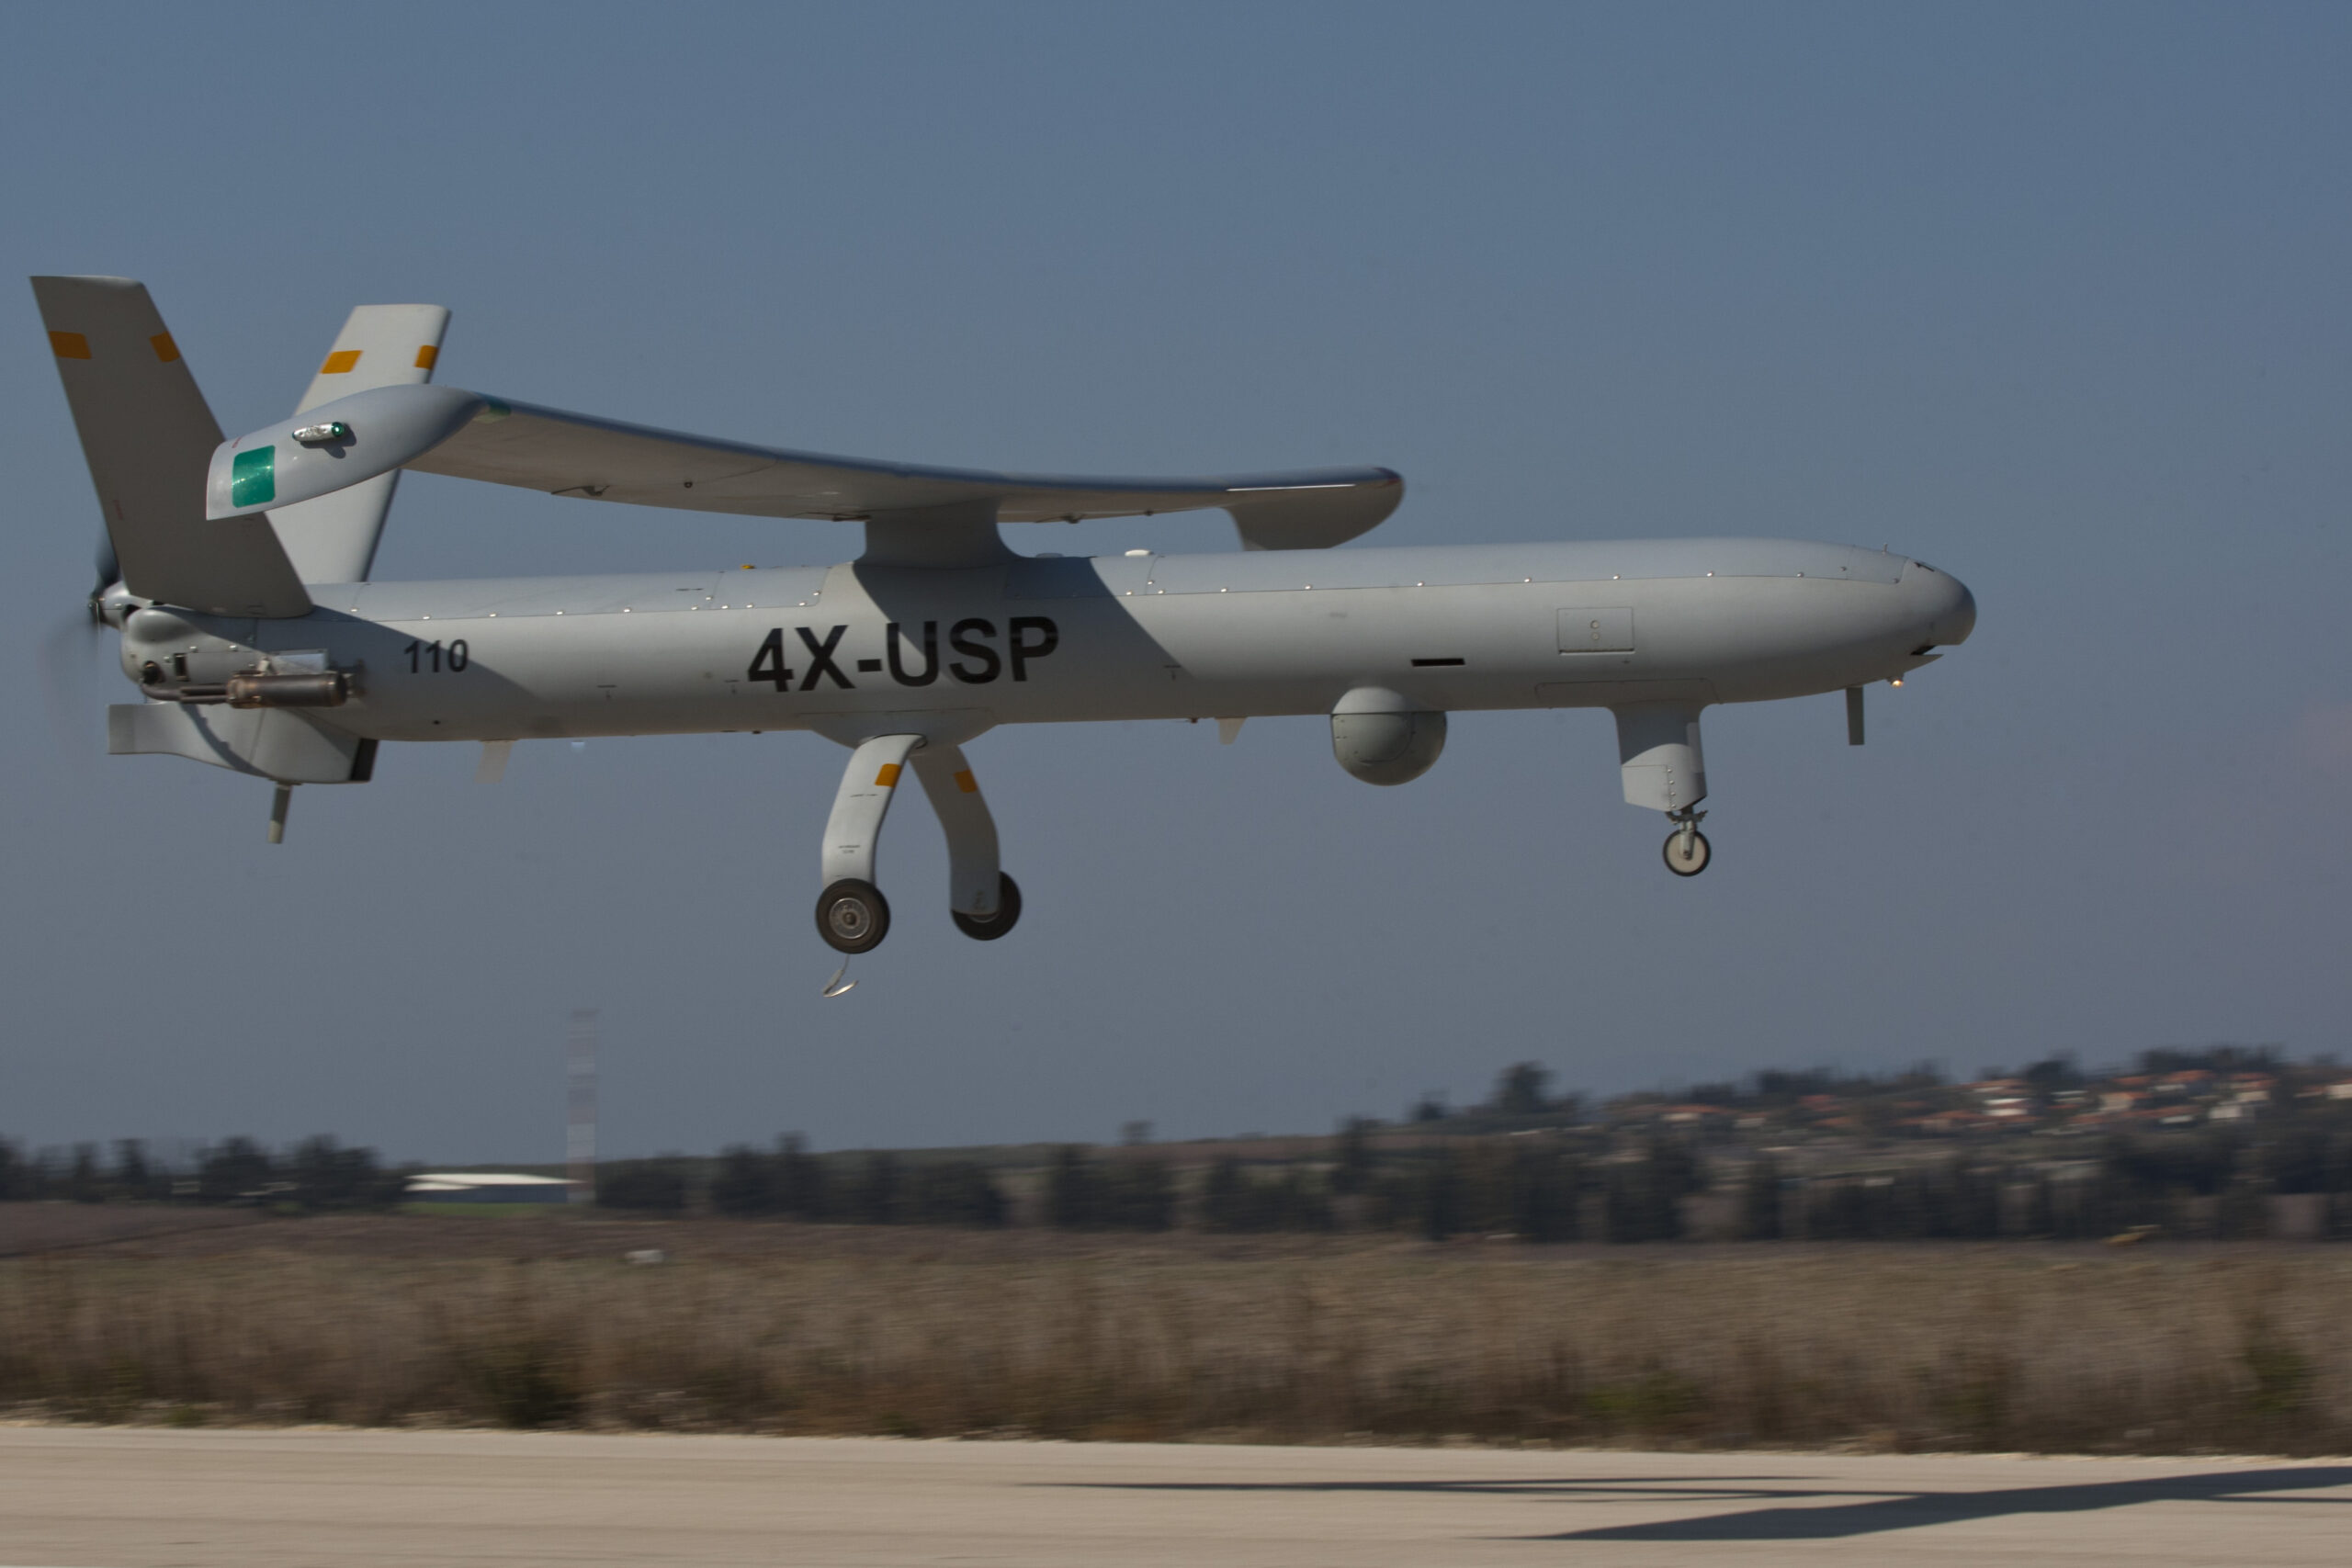 Elbit Systems Hermes-450 unmanned aircraft takeoff מל״ט זיק הרמס 450 מתוצרת אאלביט מערכות